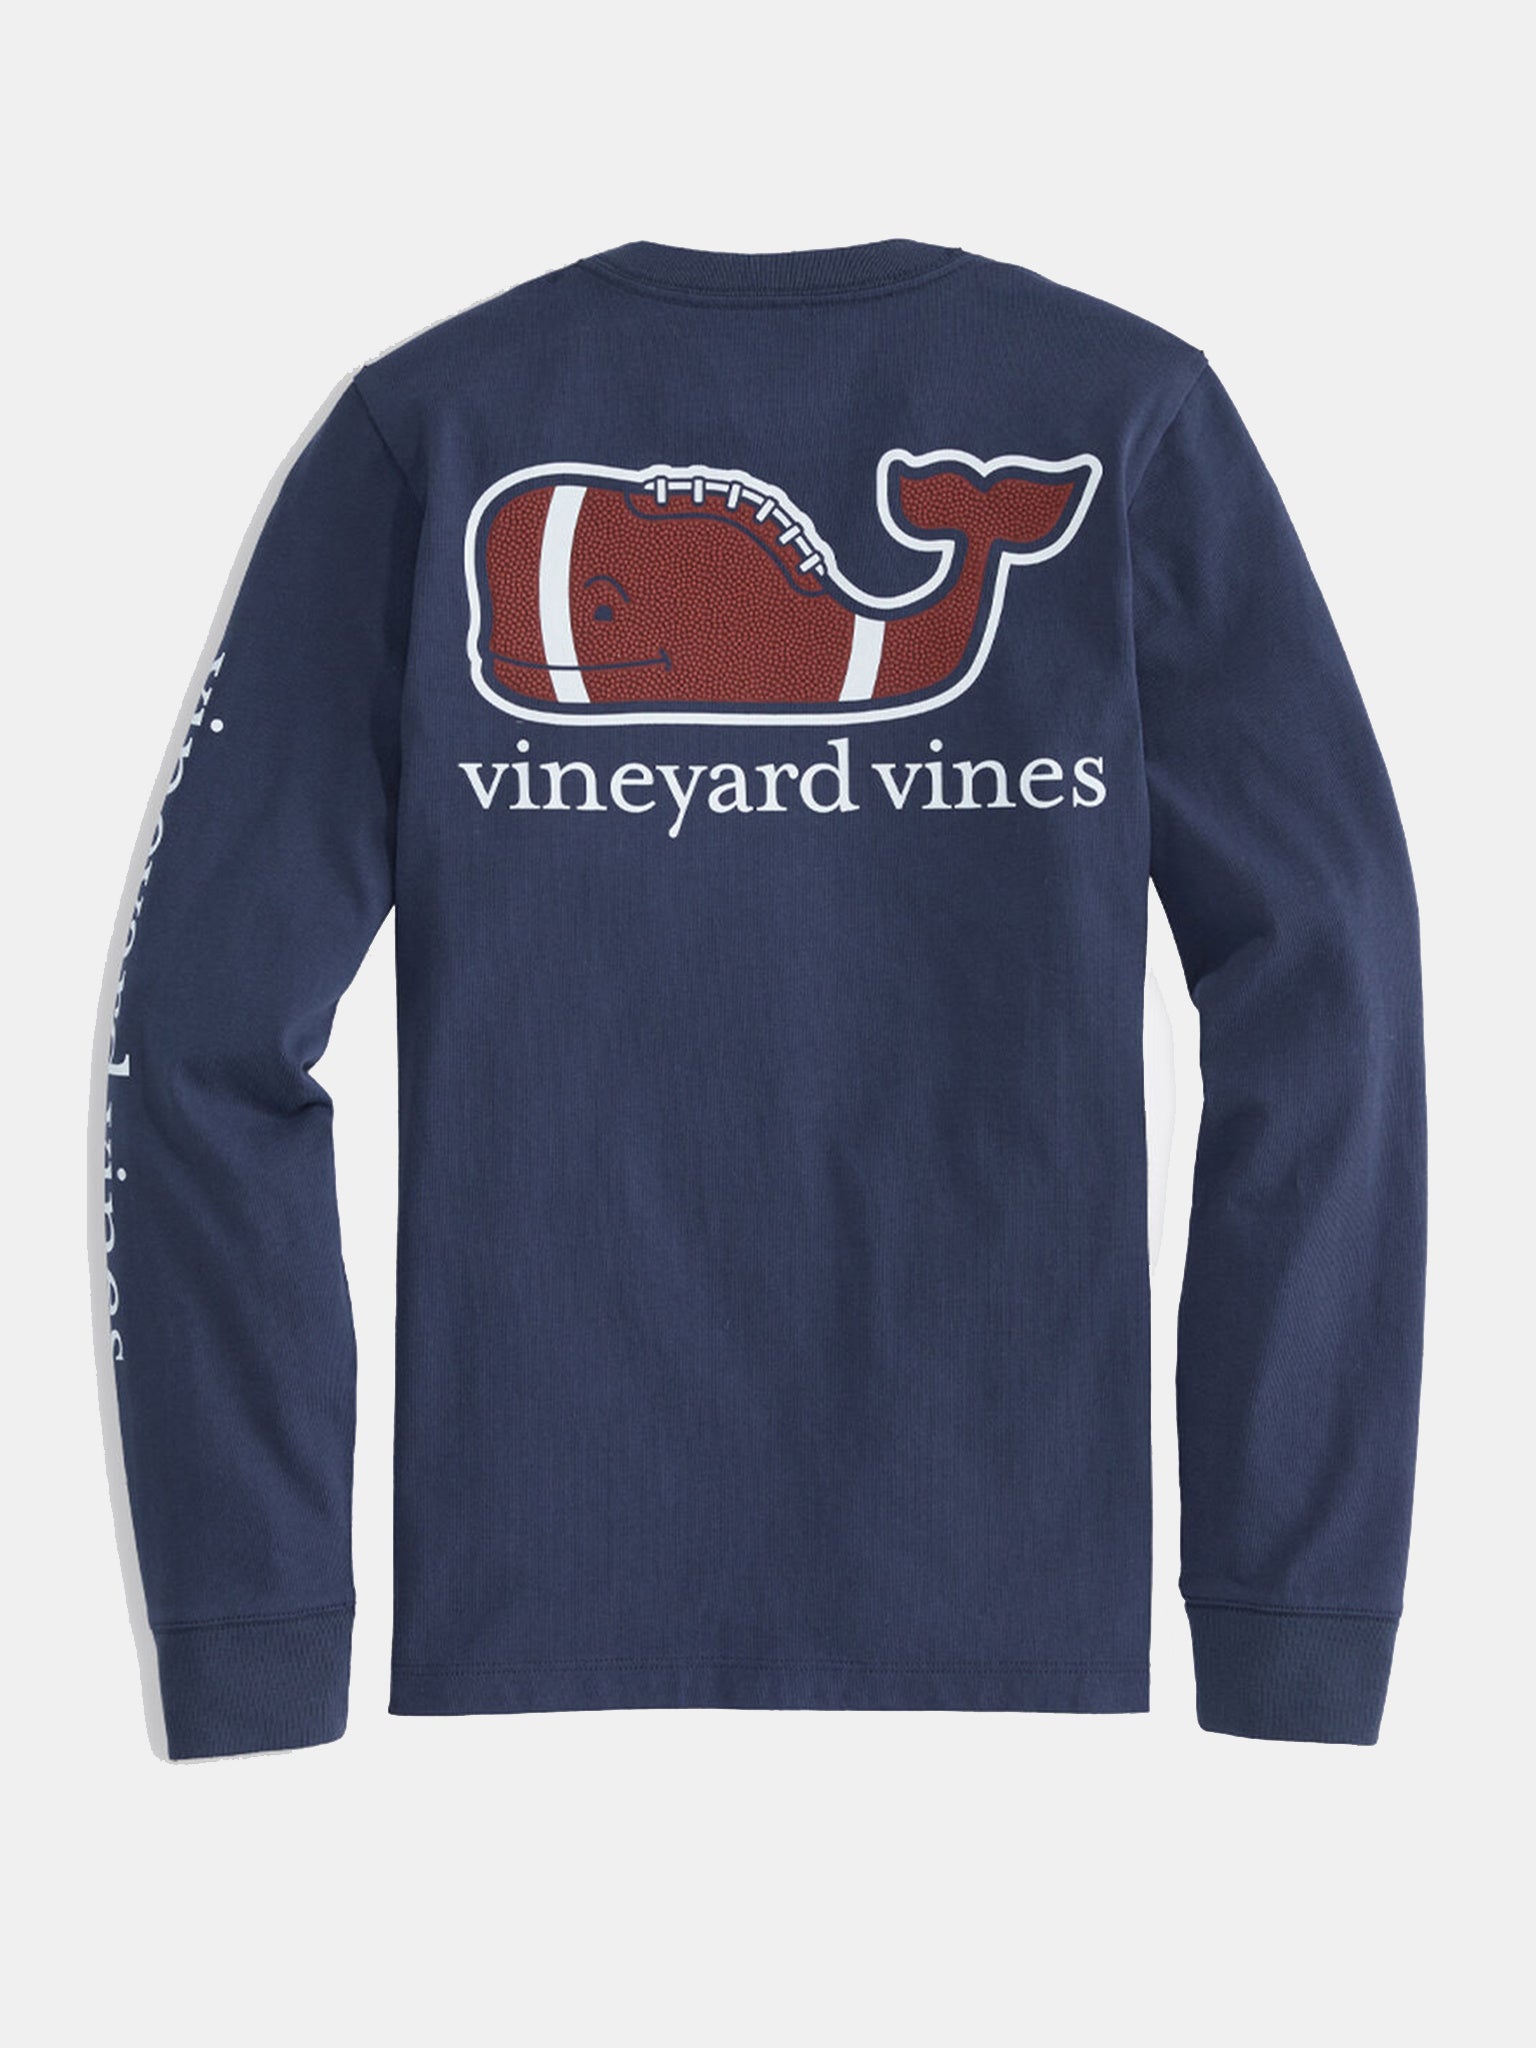 Vineyard Vines Boys Long Sleeve Football Whale Tee - Saint Bernard